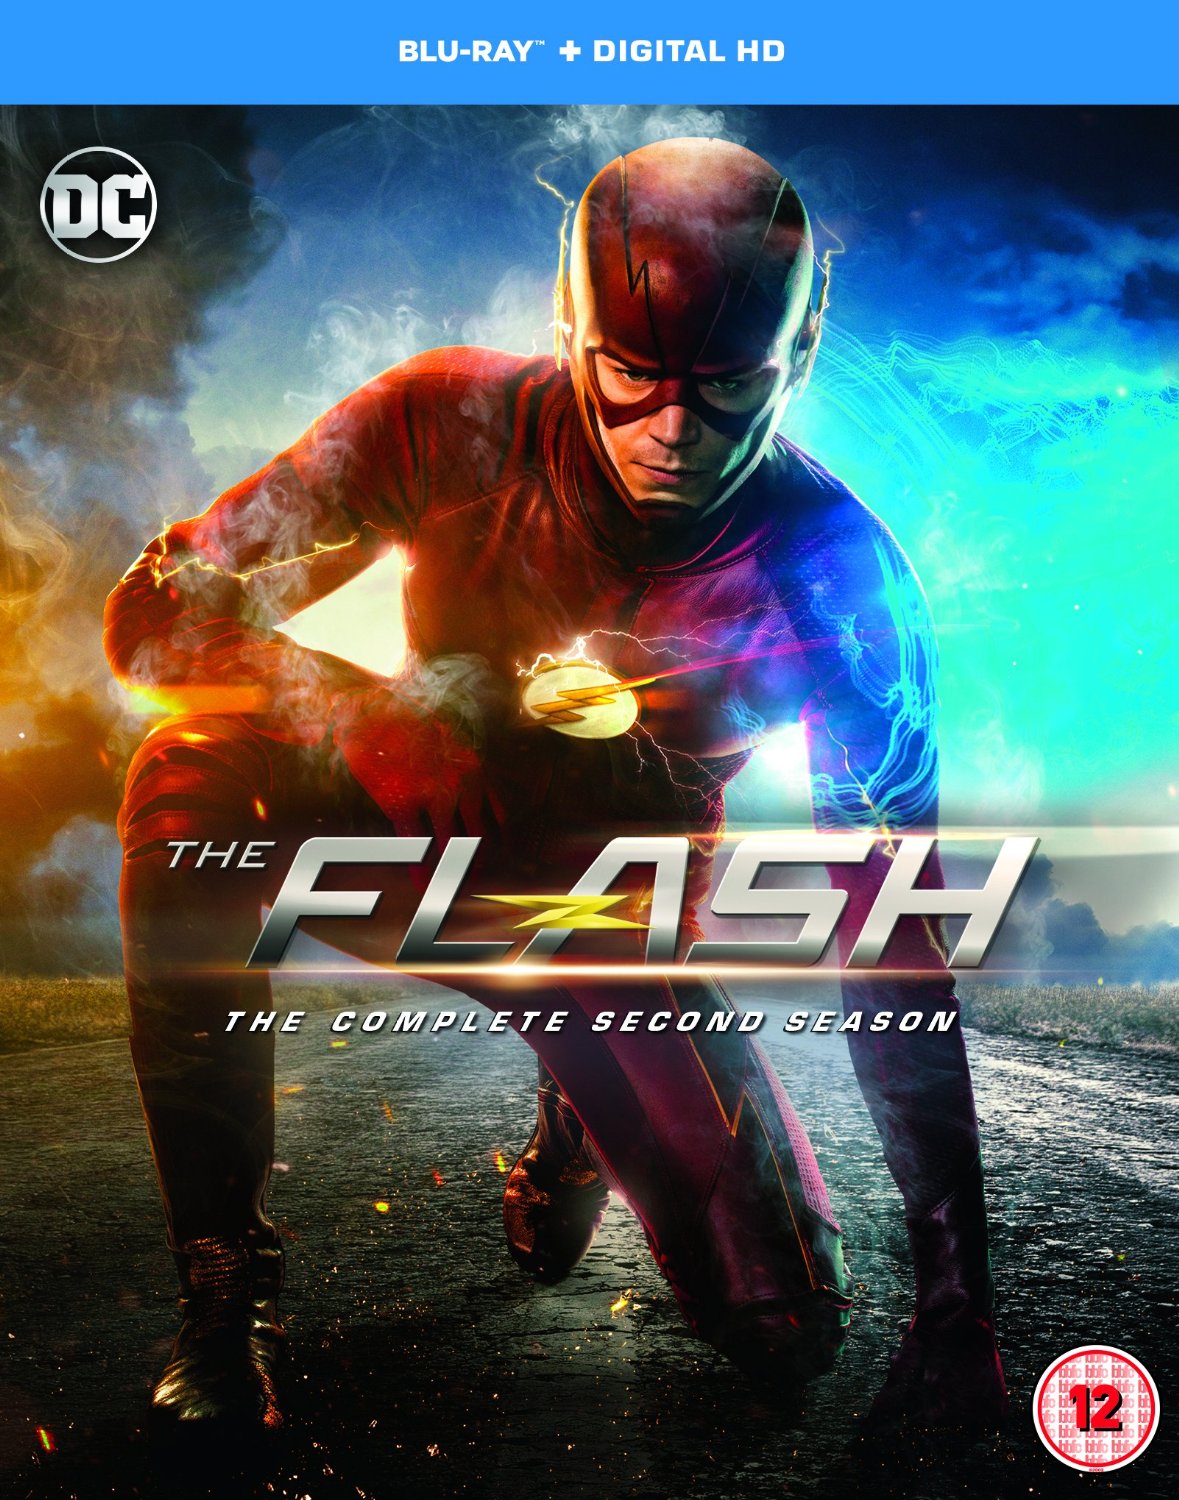 The Flash Season 2 Blu-ray review